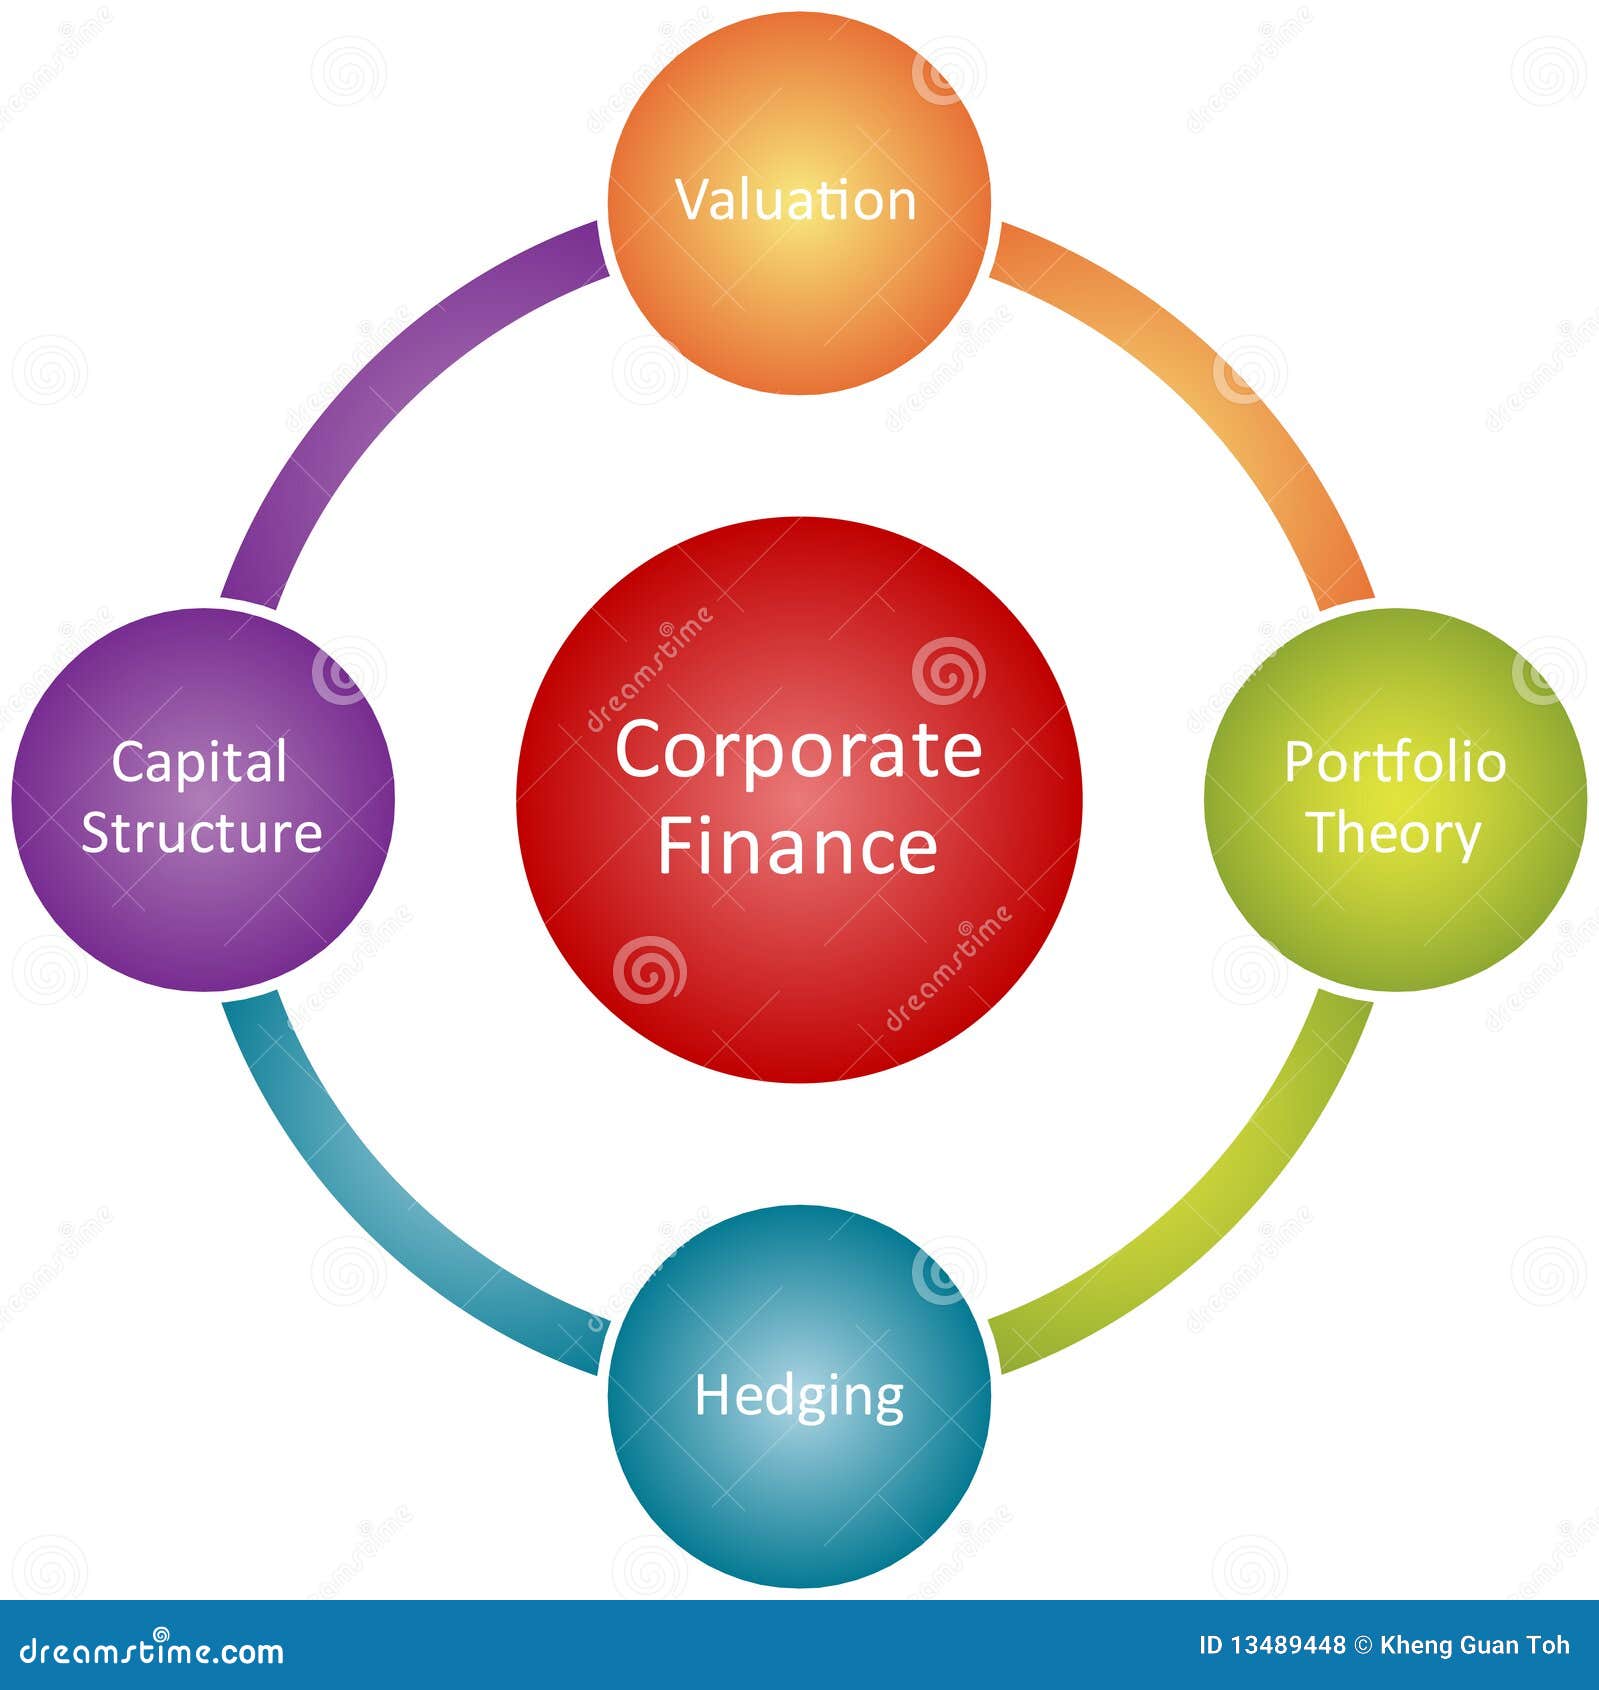 Corporate Finance Business Diagram Stock Illustration - Illustration of management, organization: 13489448